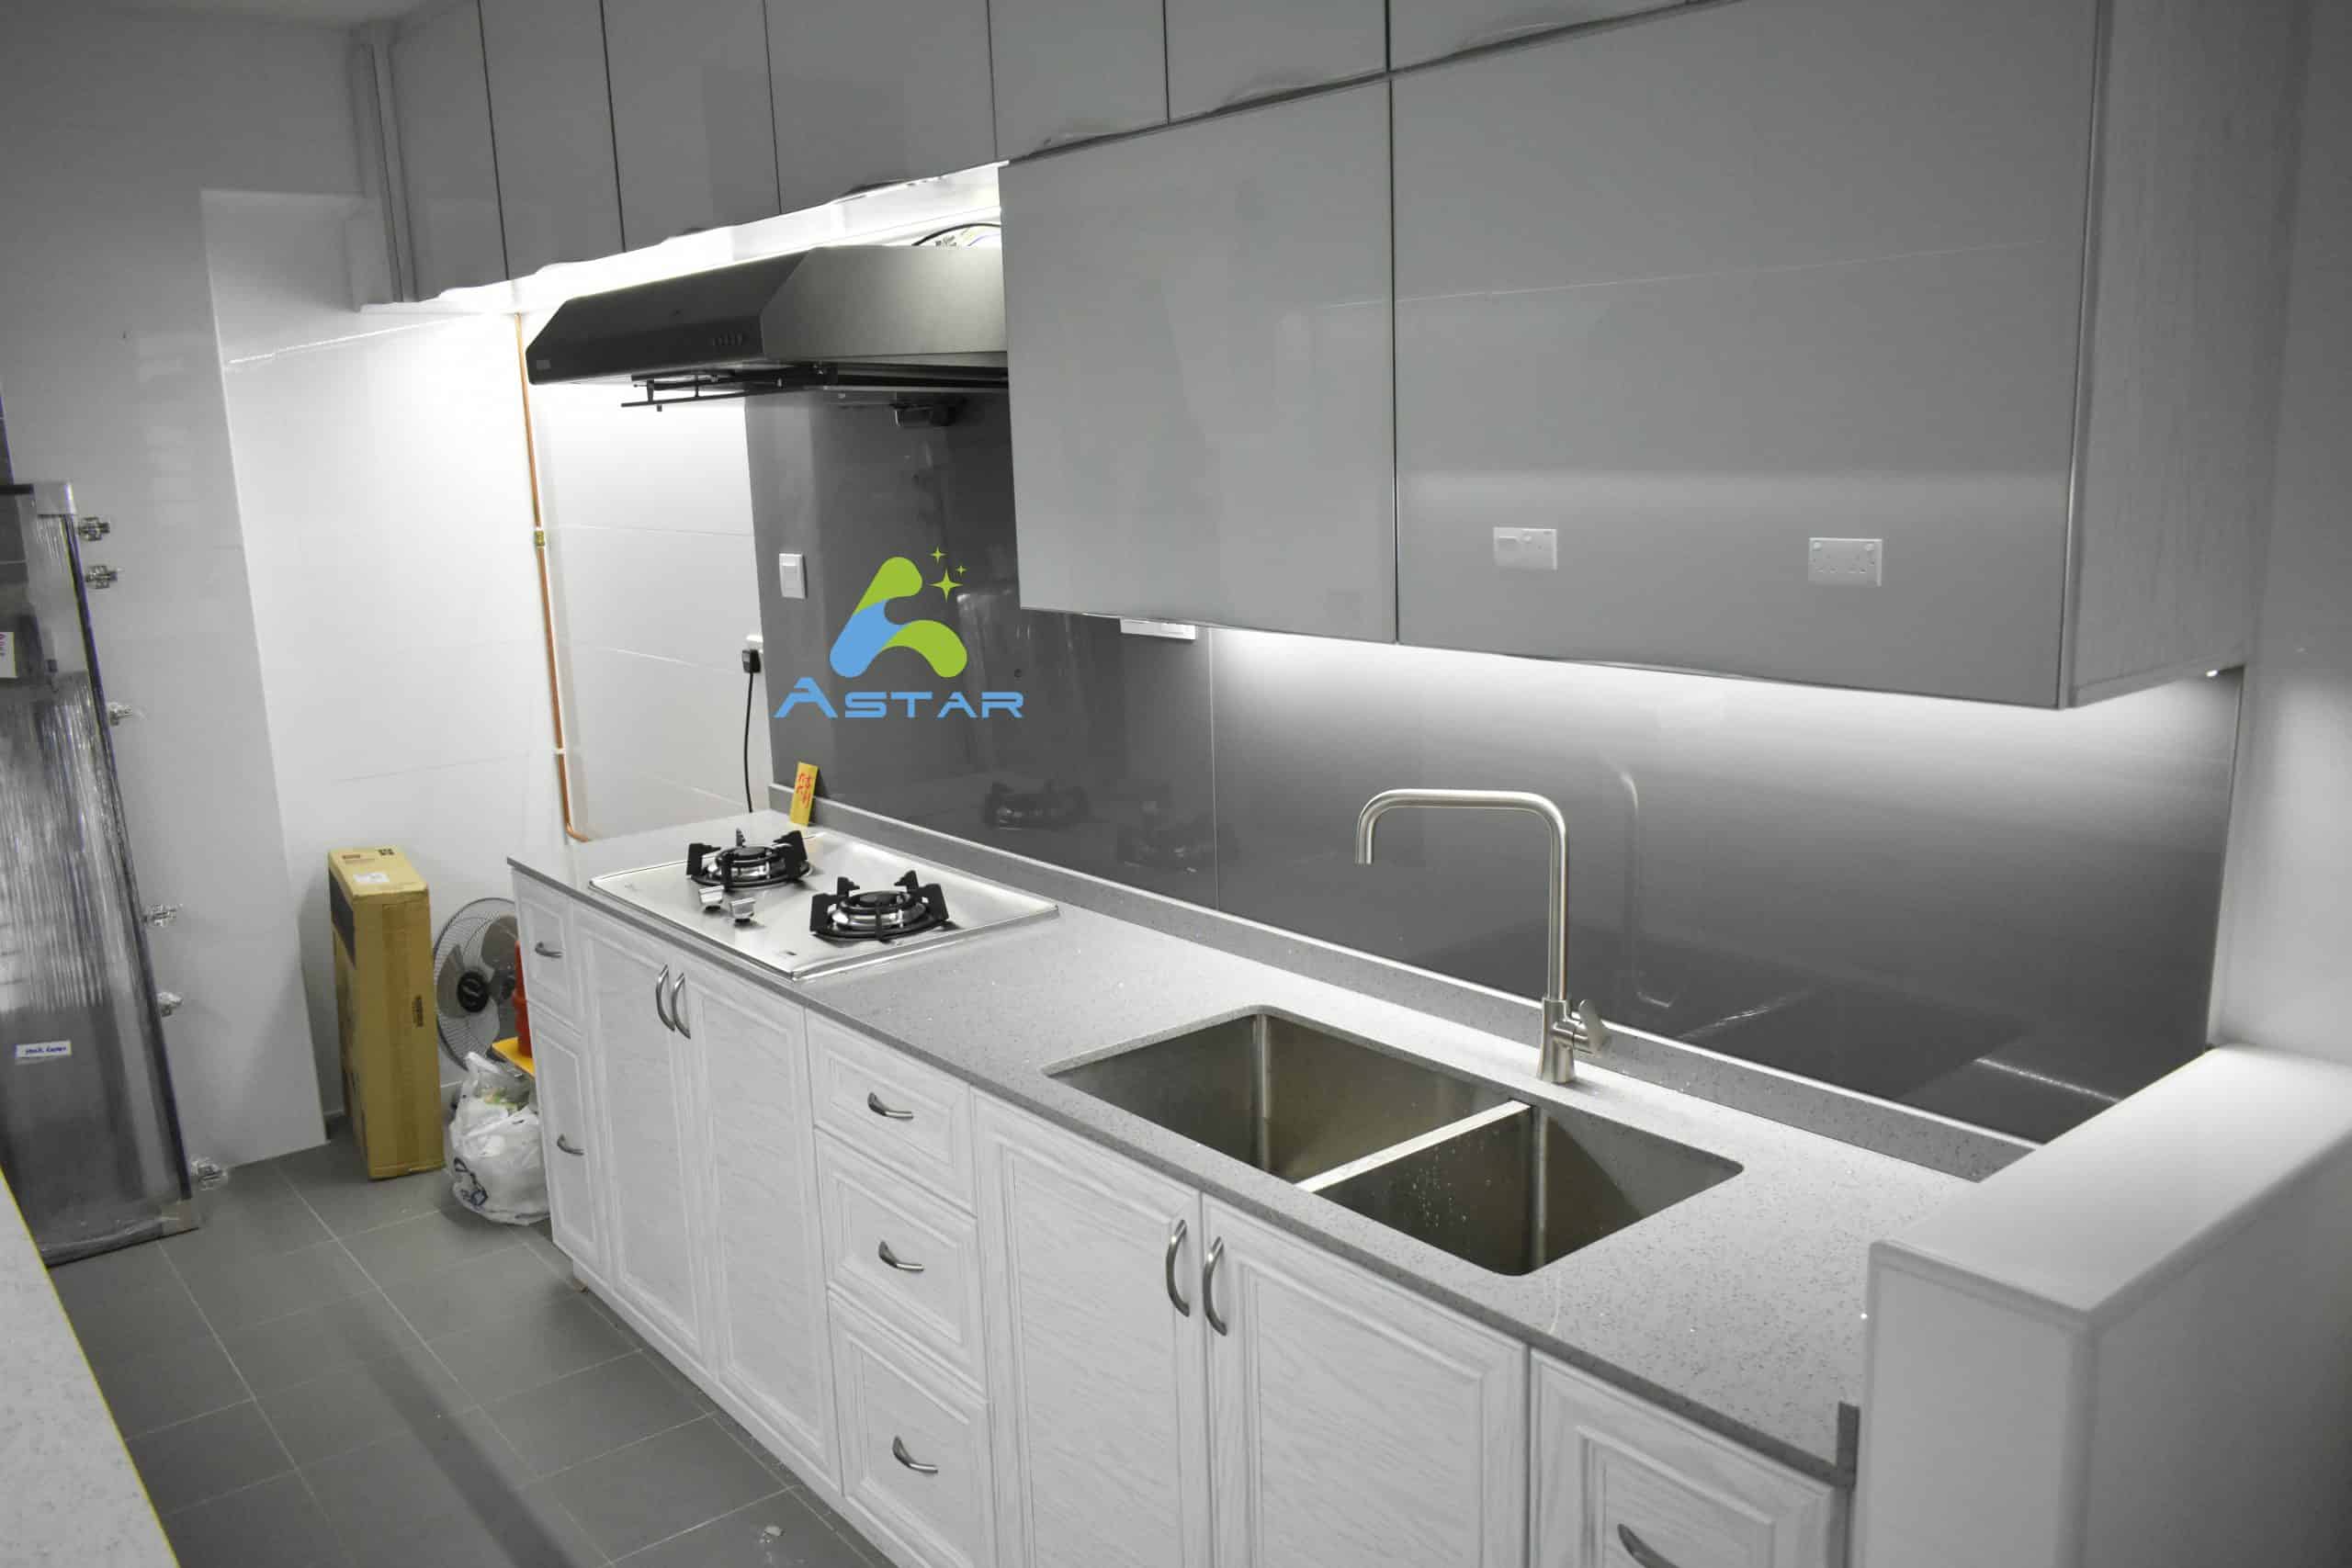 Aluminium Kitchen Cabinet   A Star Furnishing